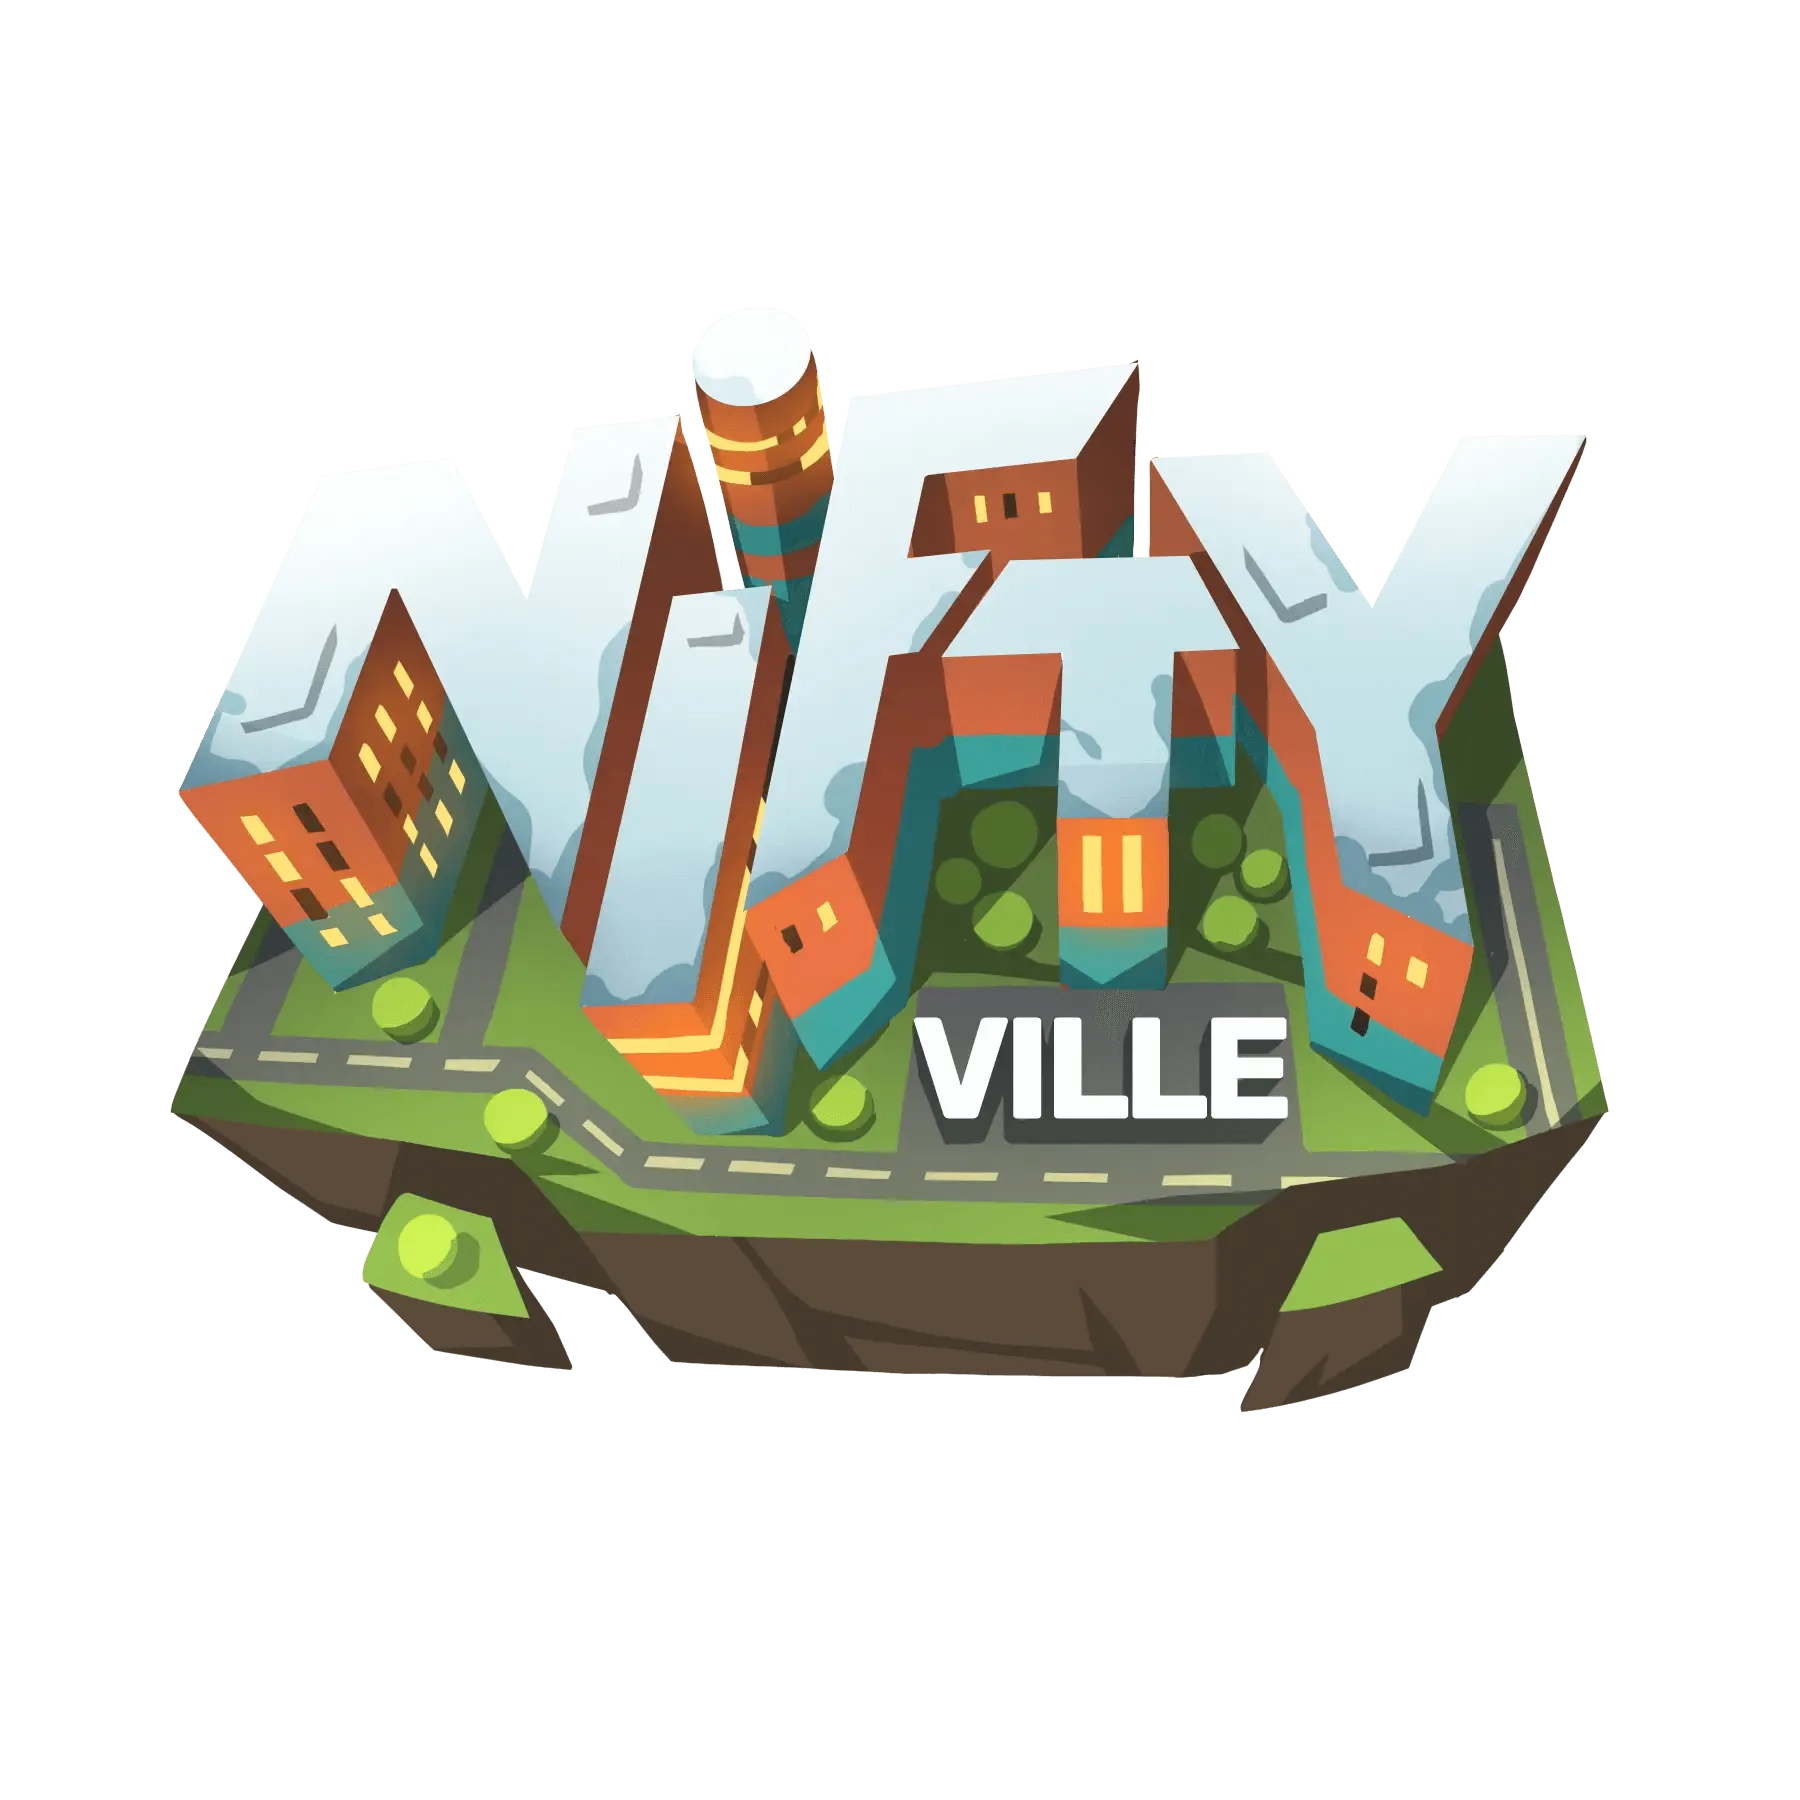 Nifty Ville